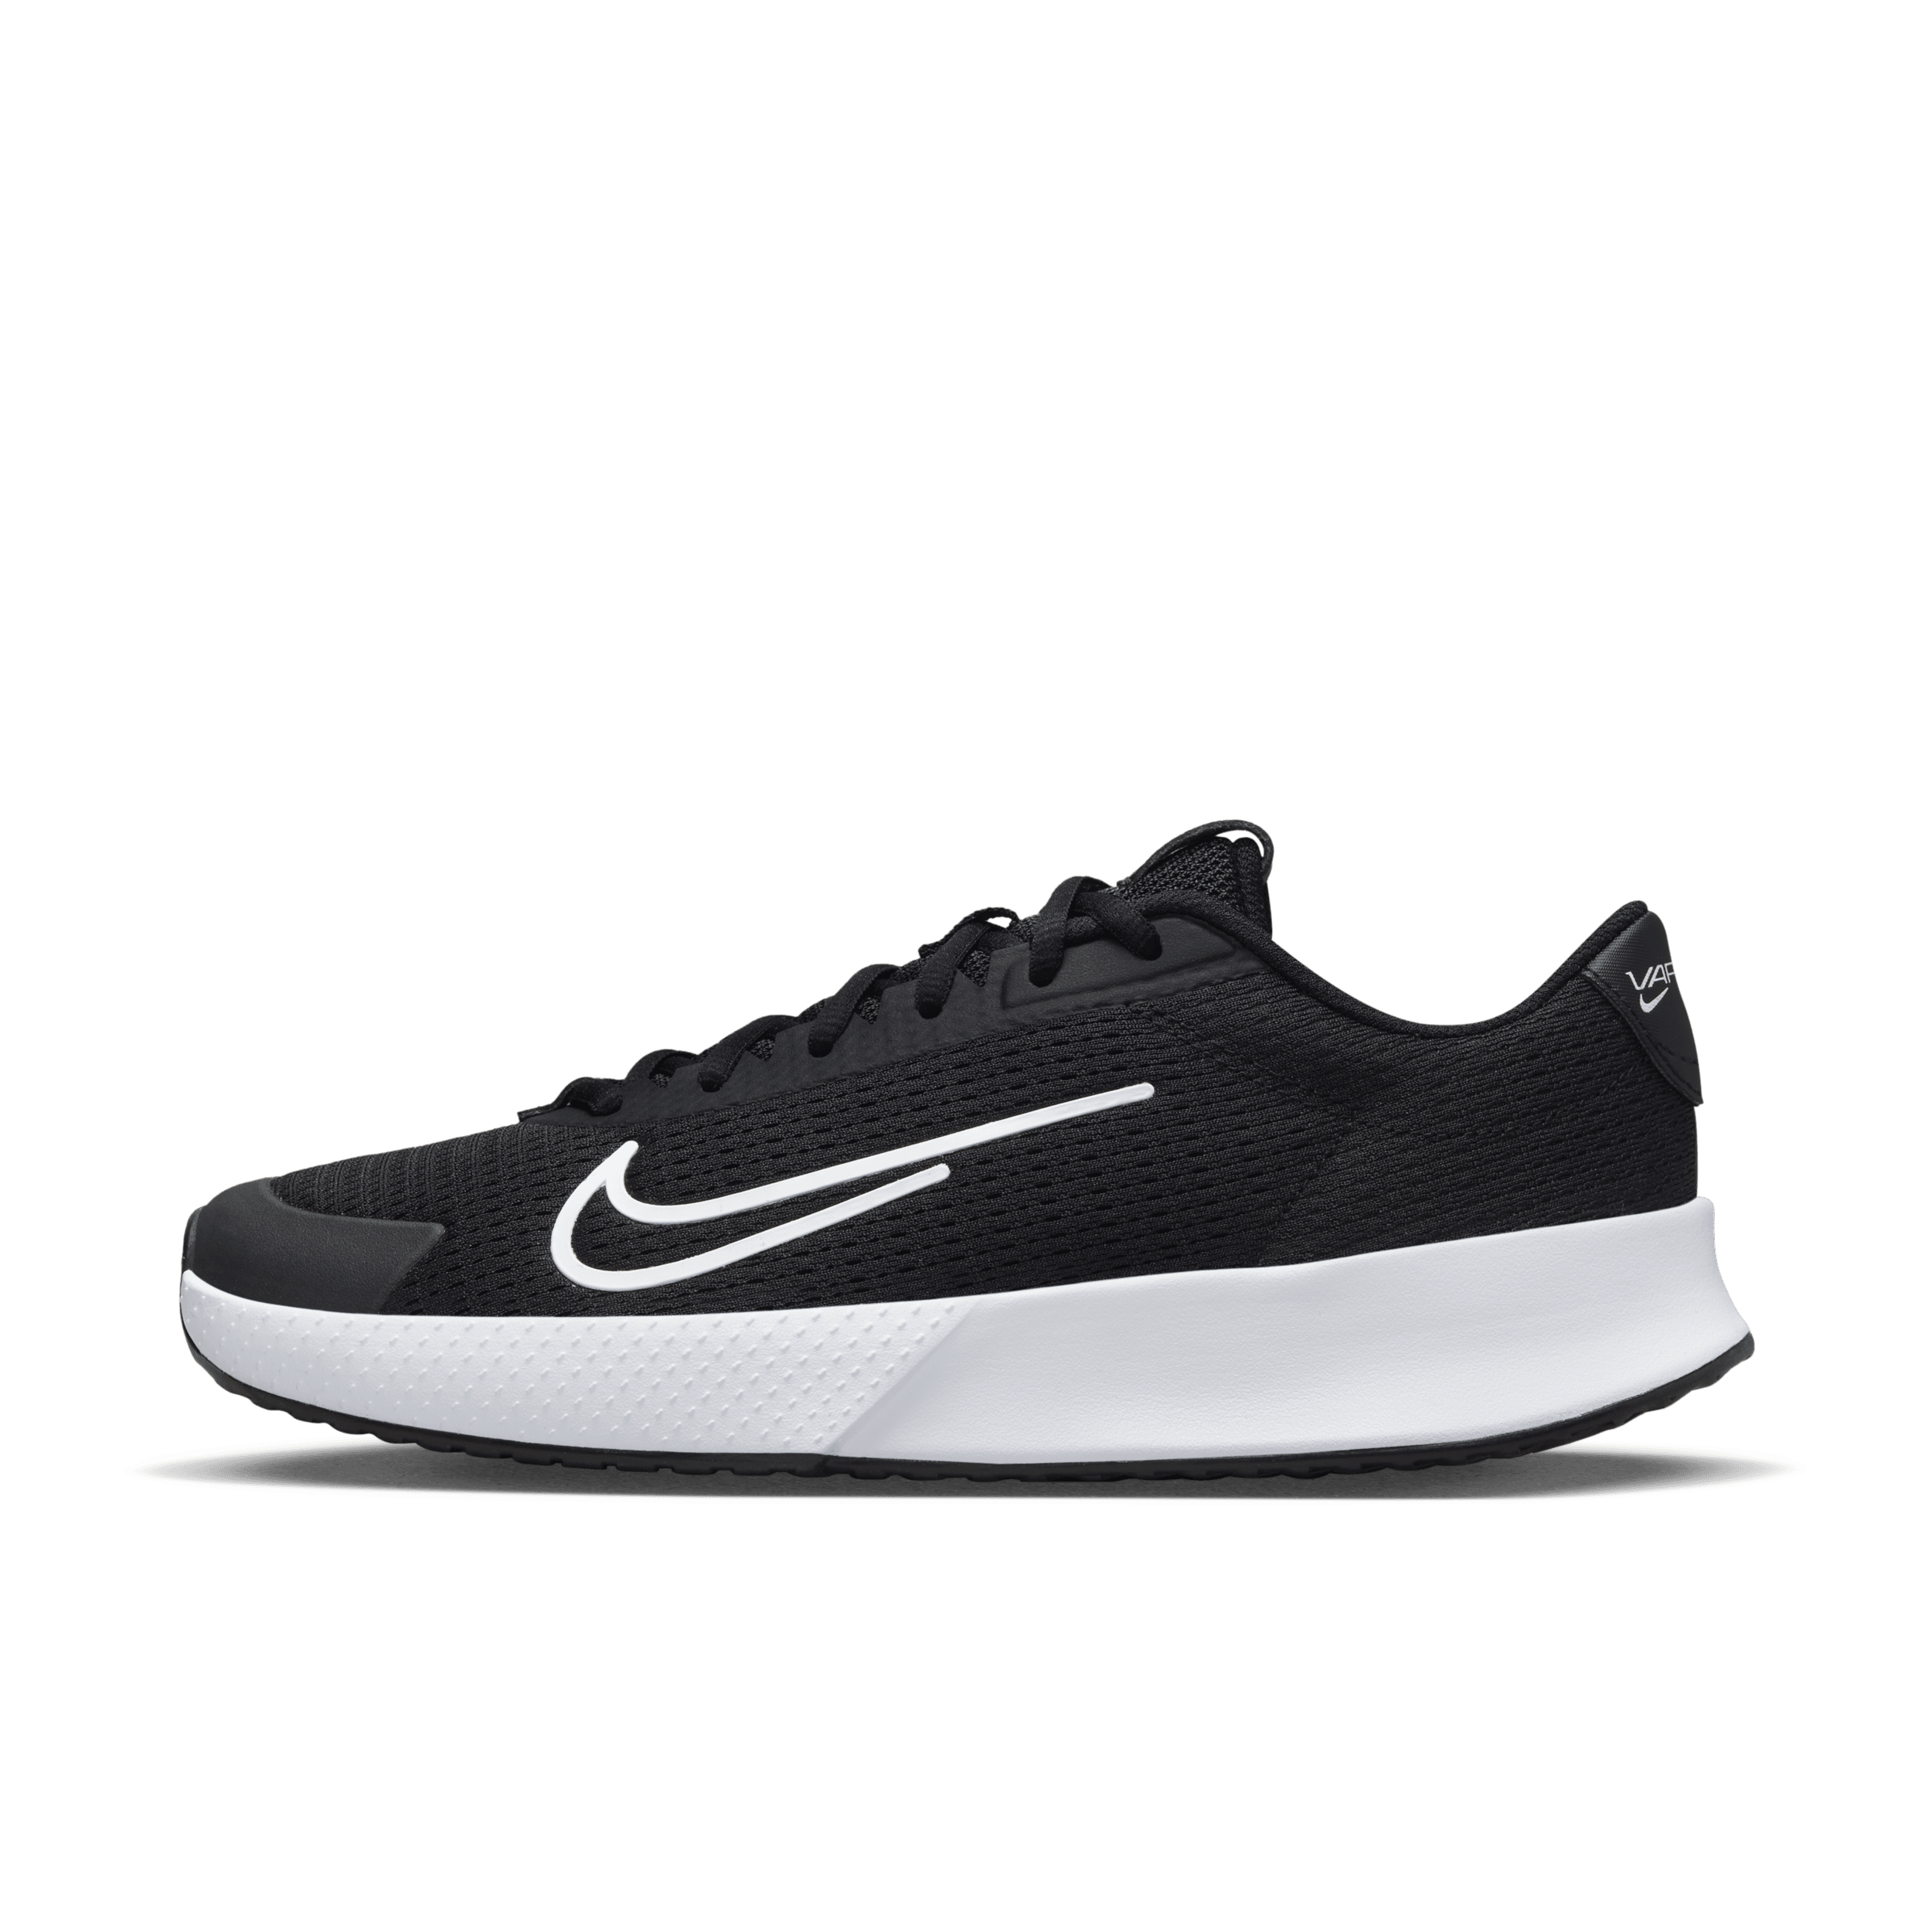 NikeCourt Vapor Lite 2 Hardcourt tennisschoenen voor dames - Zwart